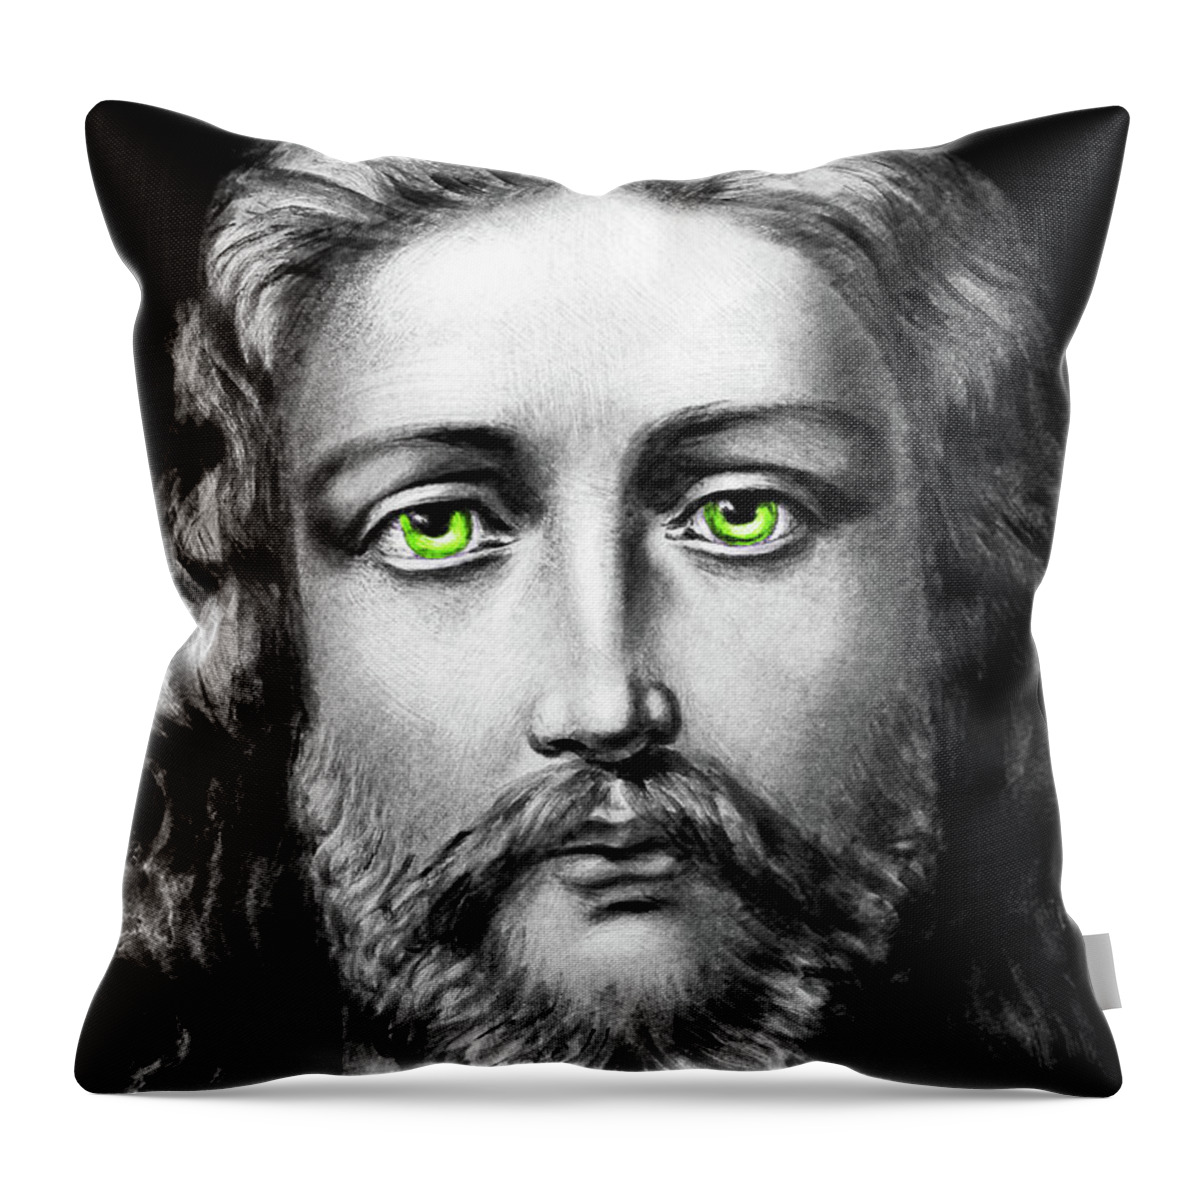 Jesus Christ Throw Pillow featuring the photograph Jesus Green Eyes by Munir Alawi